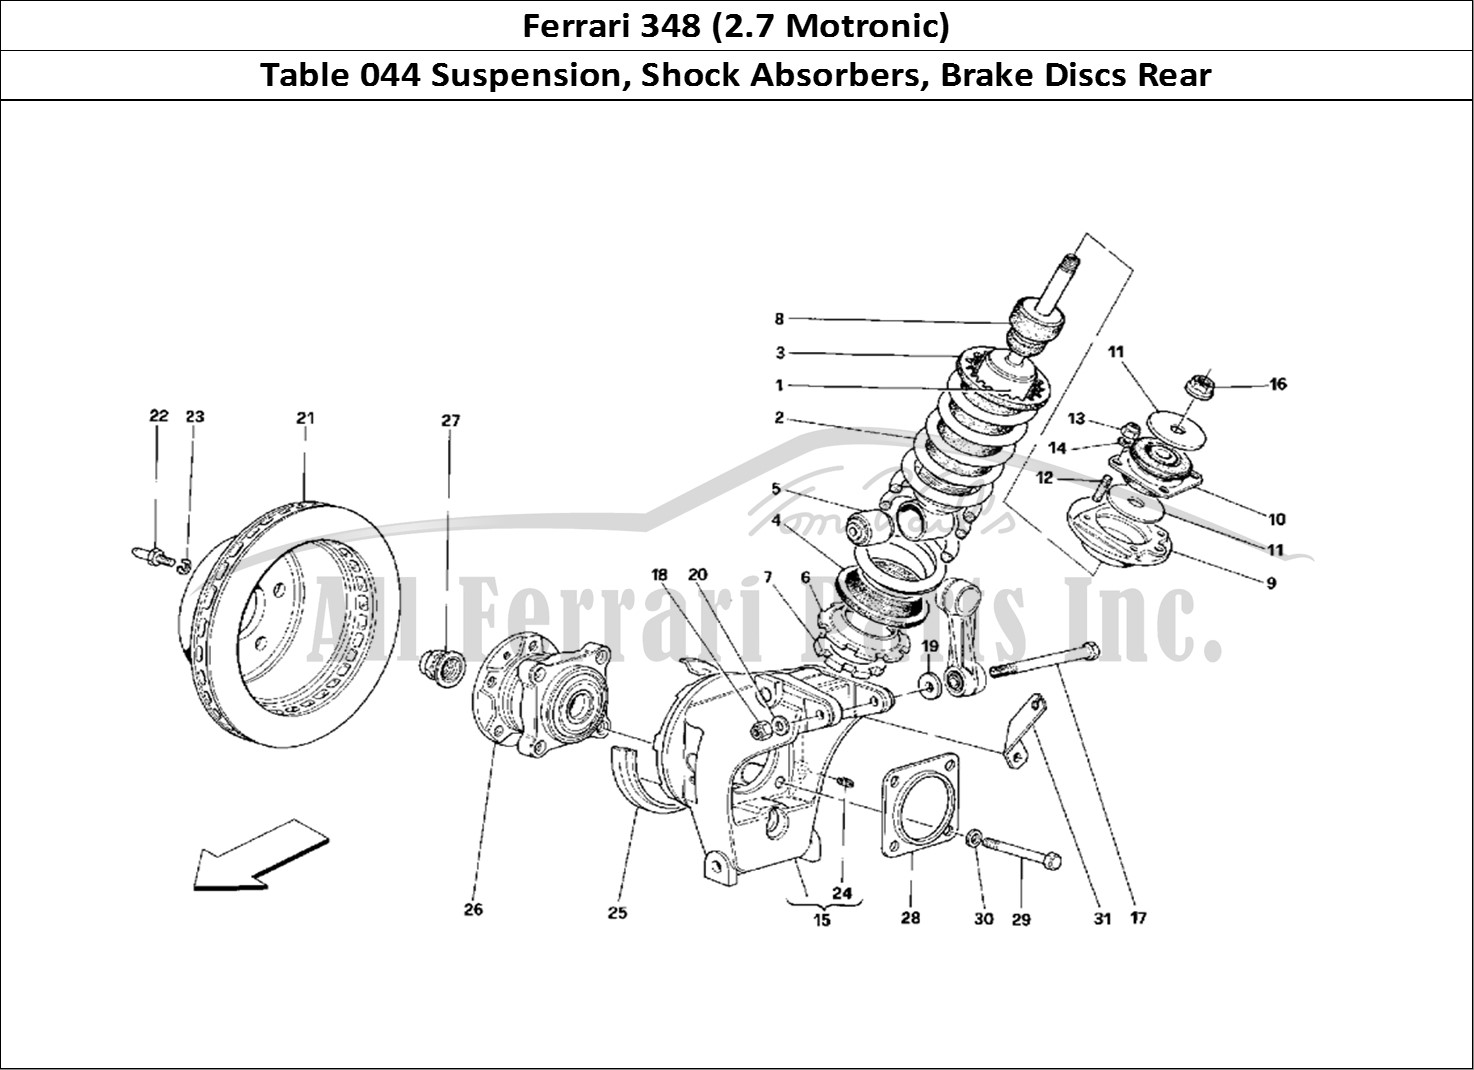 Ferrari Parts Ferrari 348 (2.7 Motronic) Page 044 Rear Suspension - Shock A